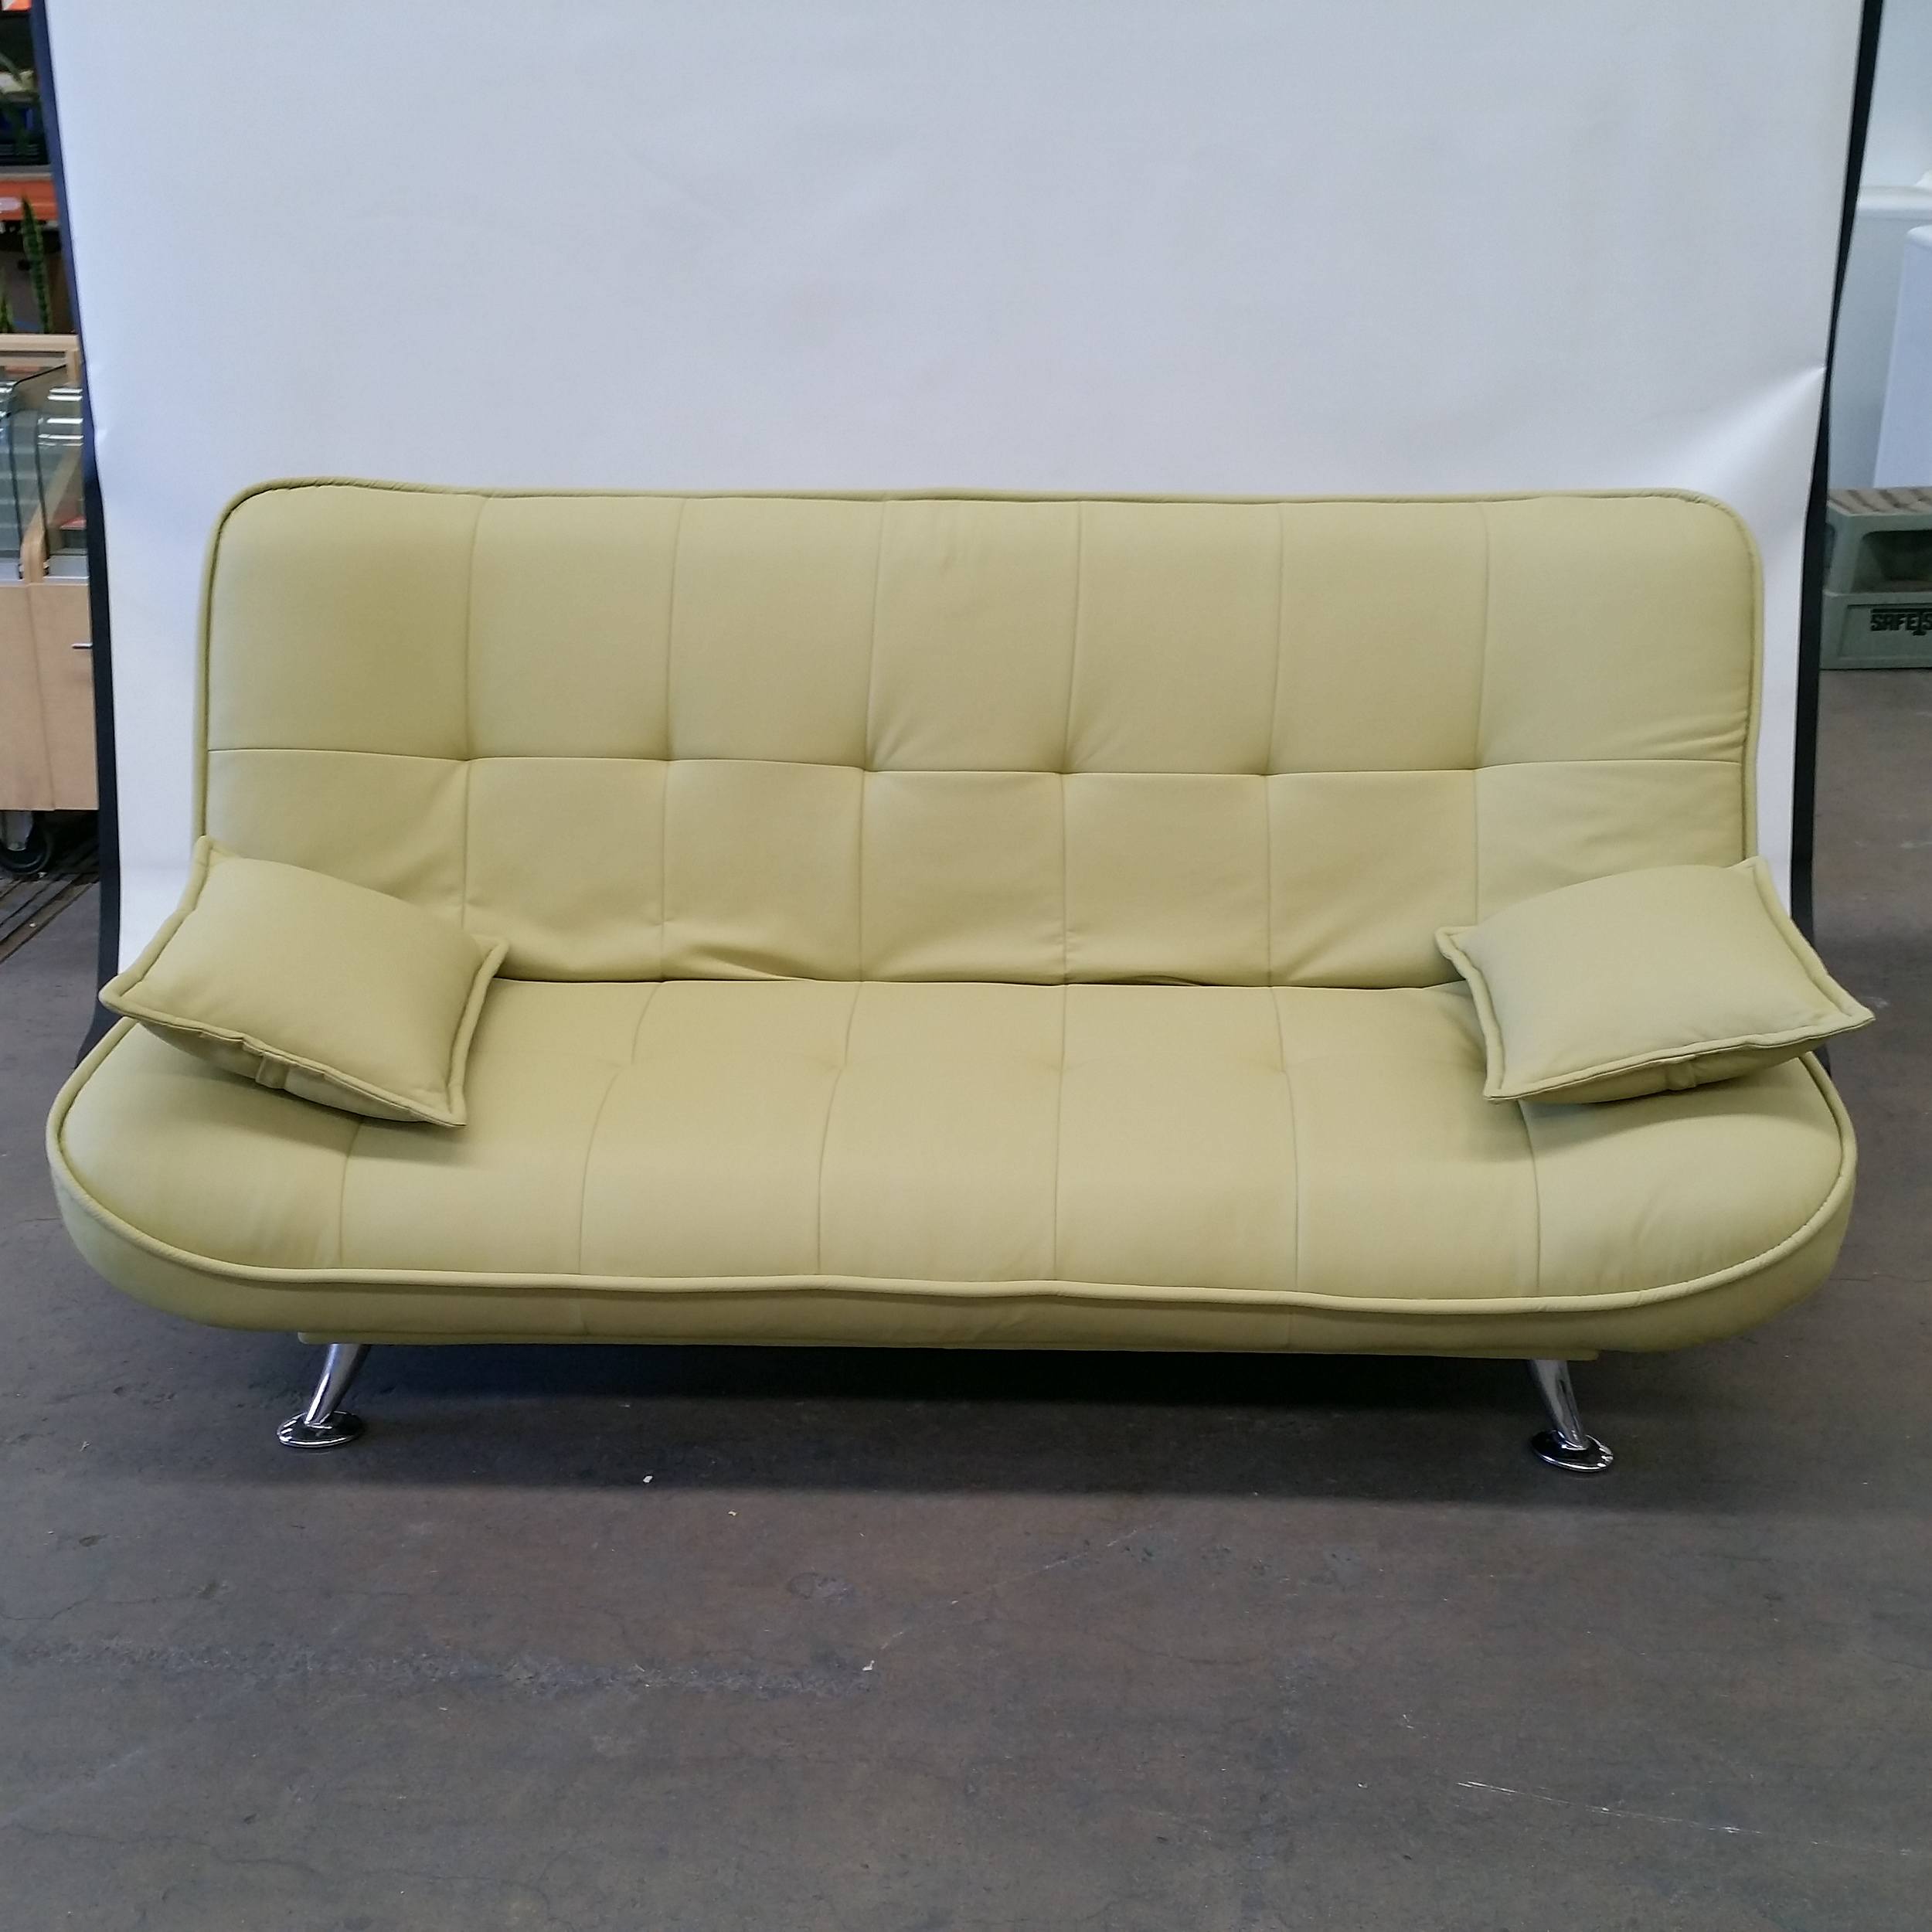 Green 2 Seater Sofa Bed - Lot 1107186 | ALLBIDS